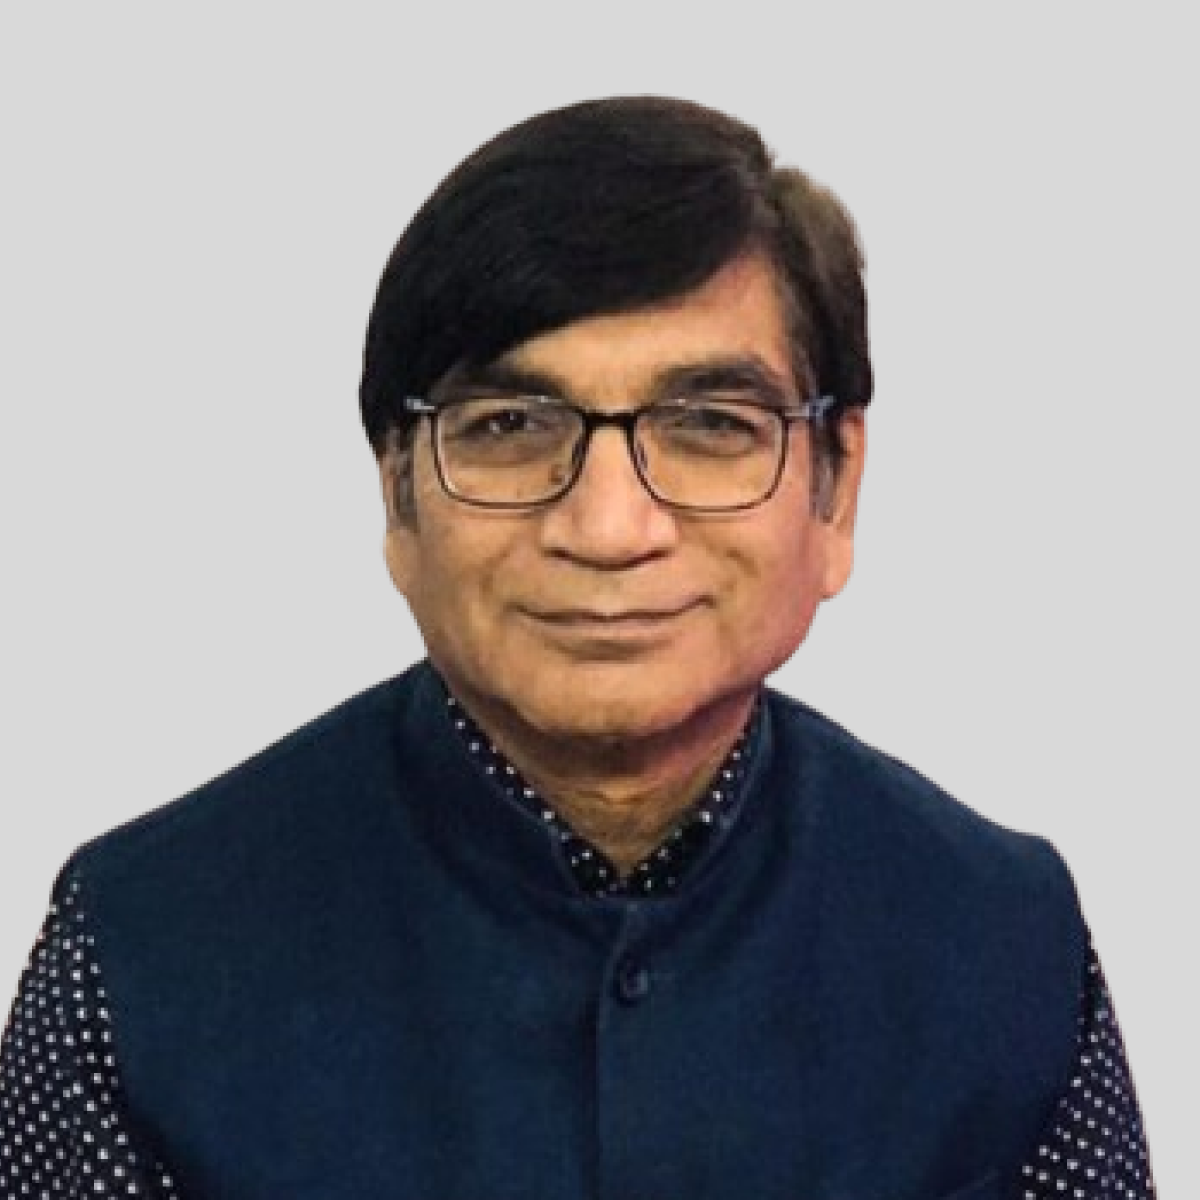 Mr. Virendra Kumar Pathak